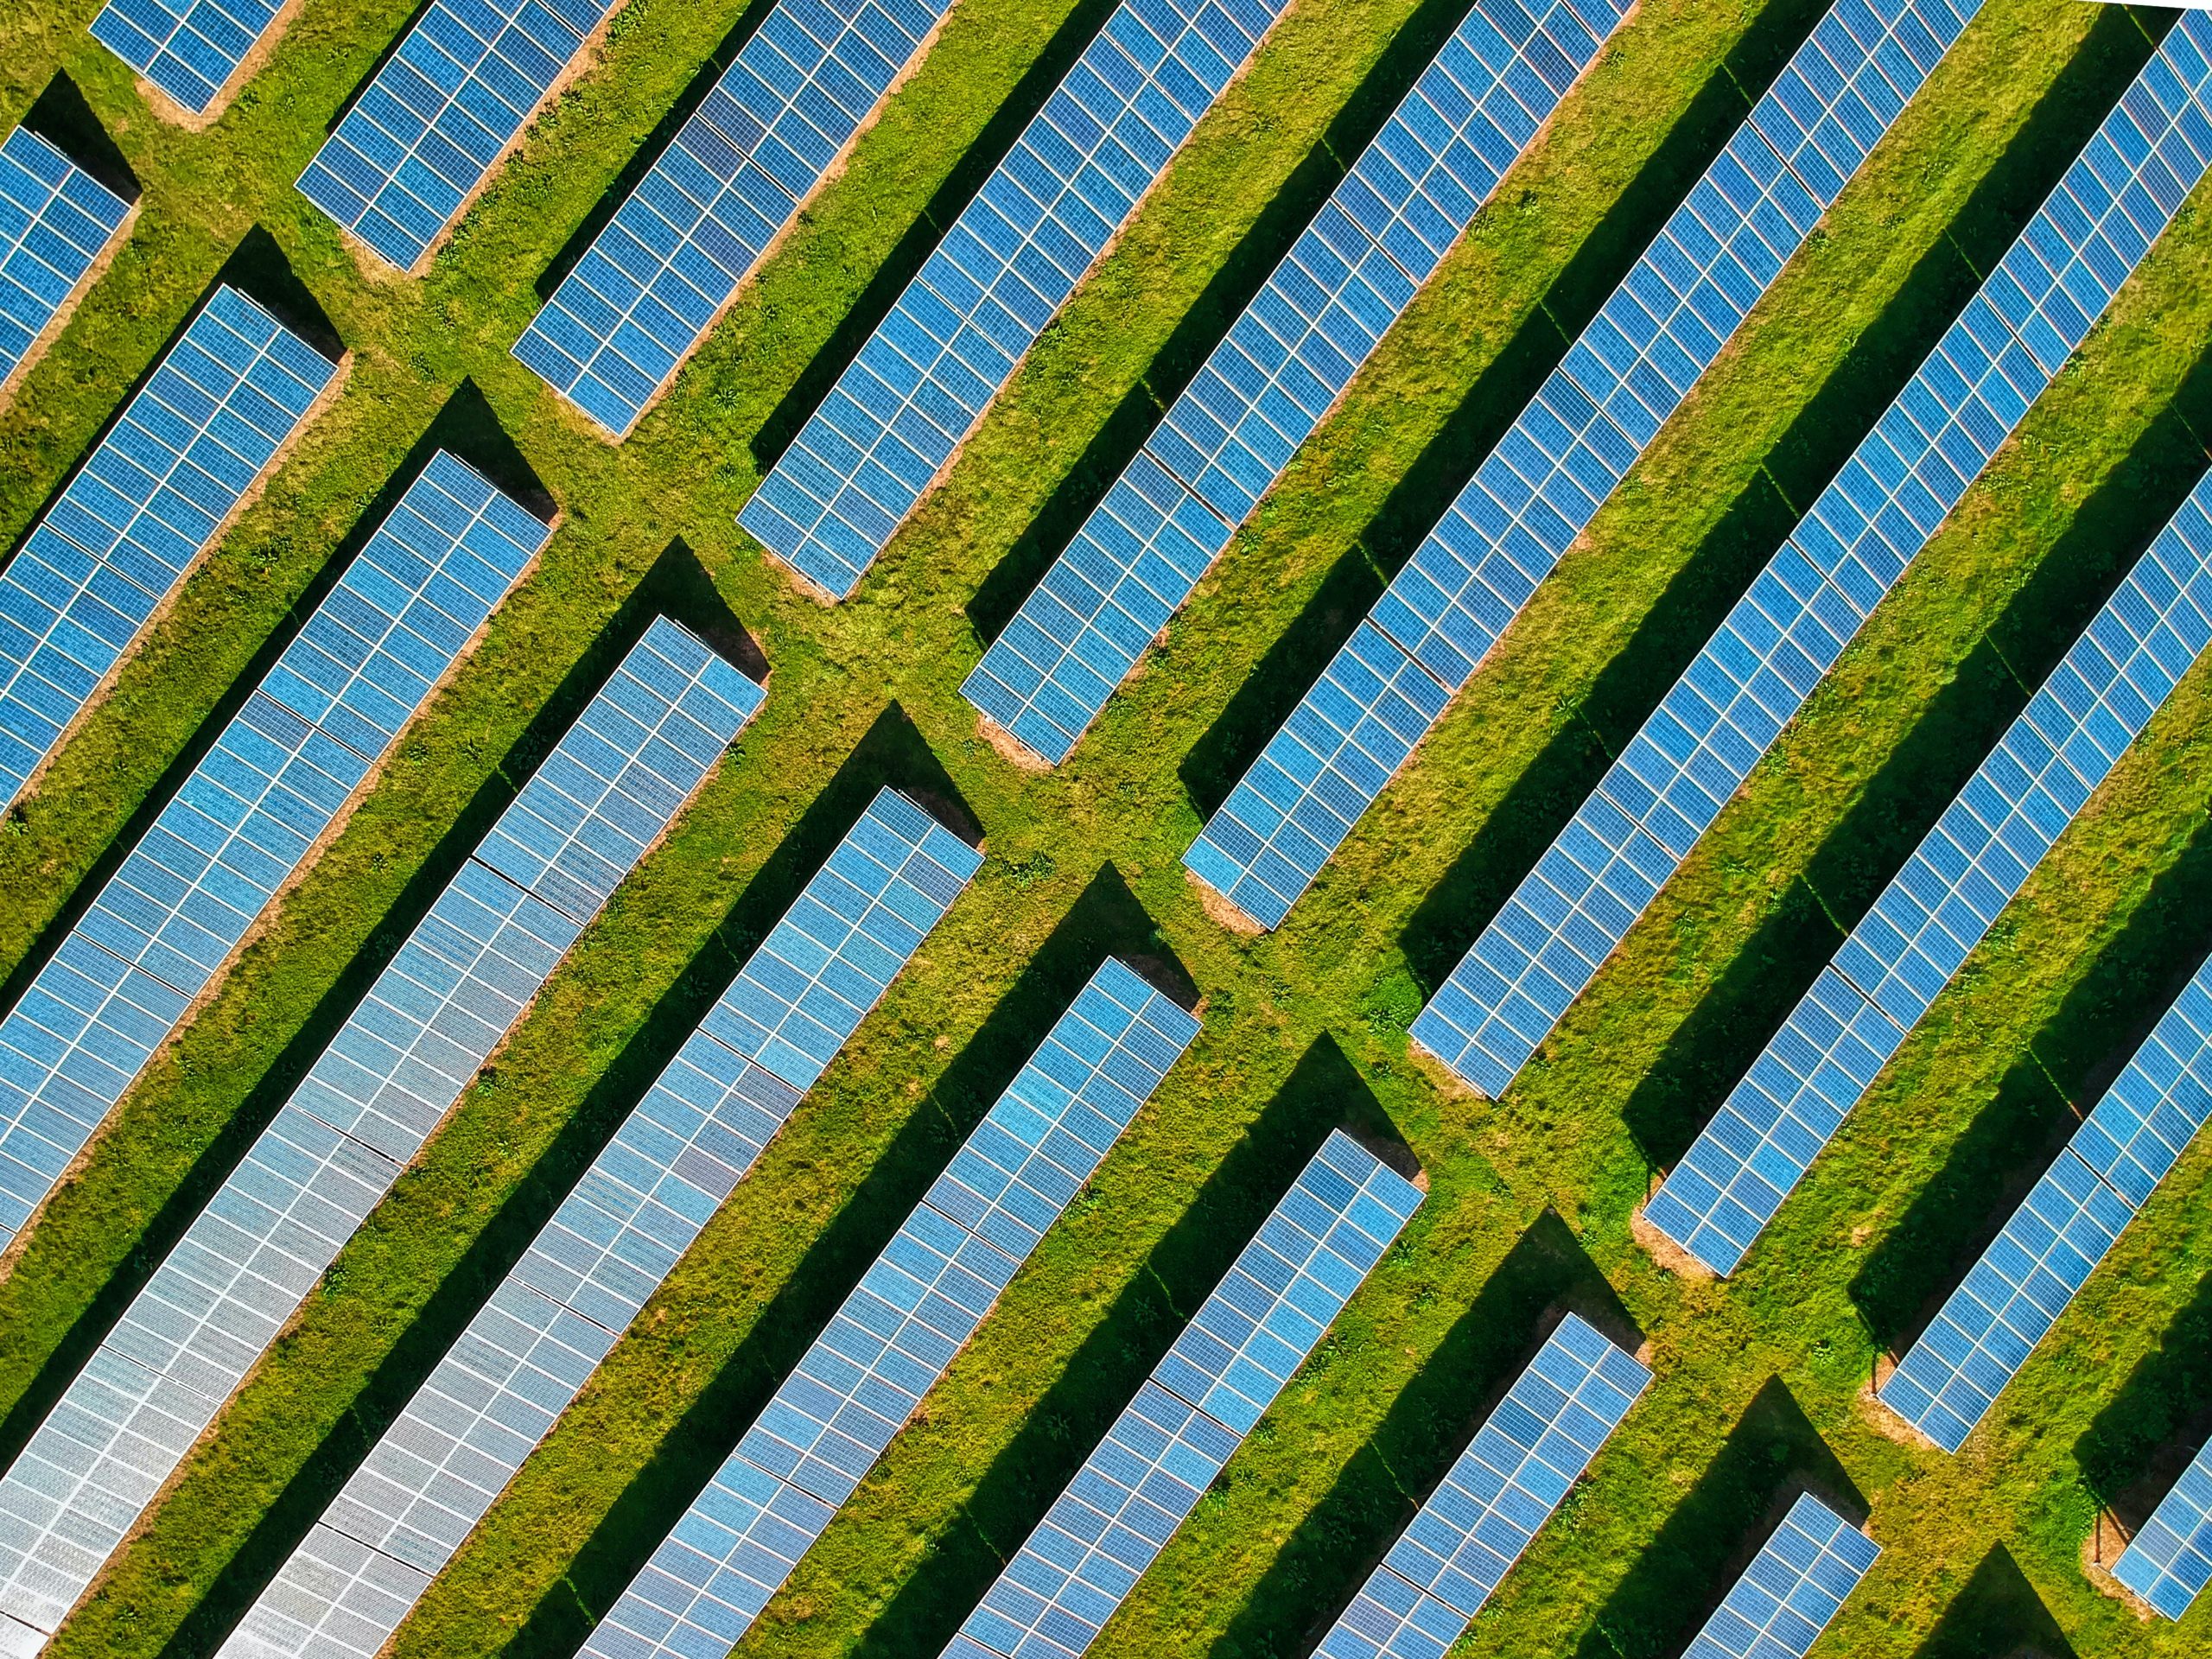 Solarkollektoren auf einem Feld